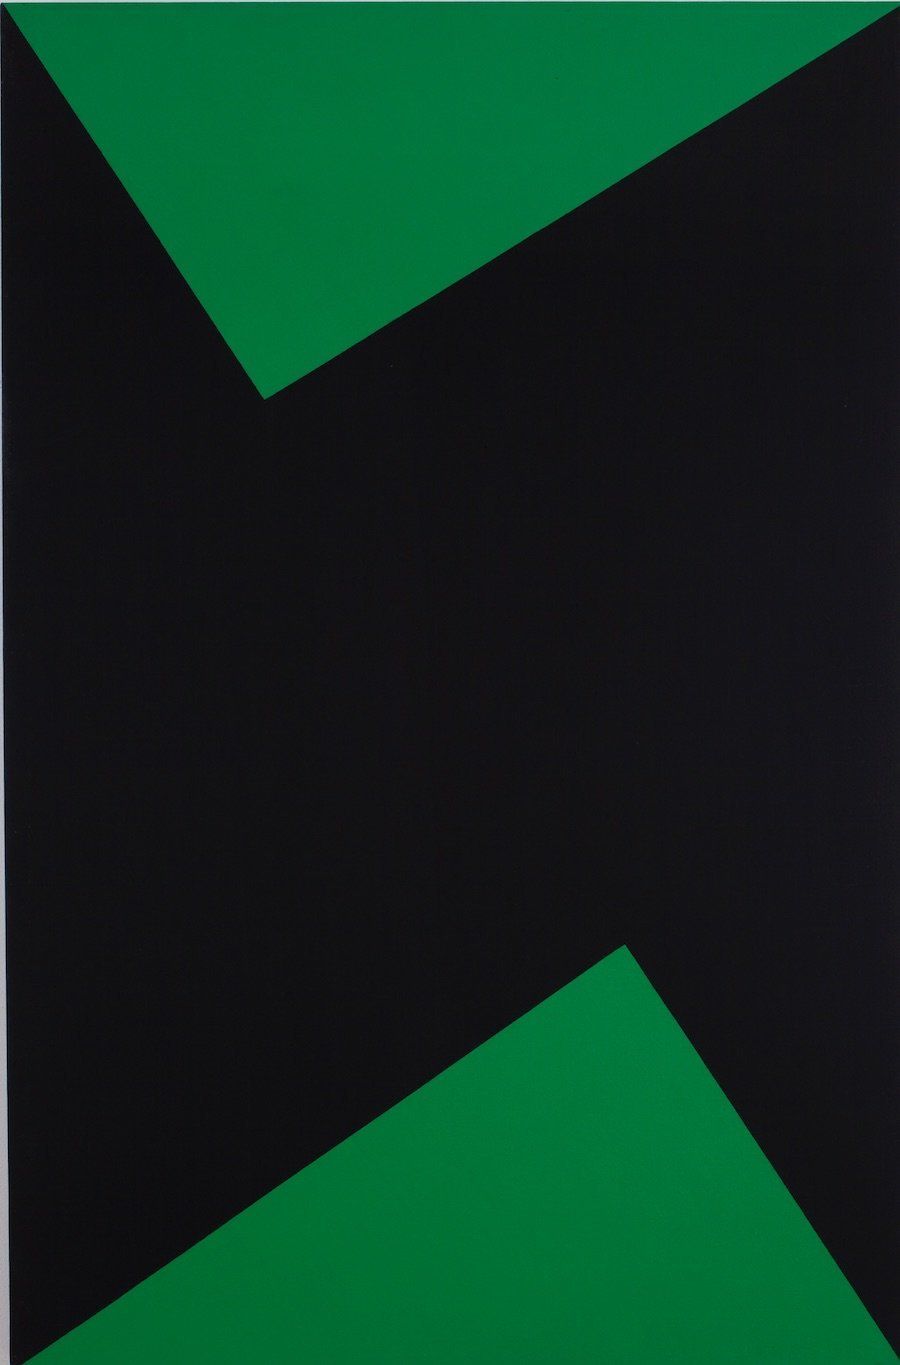 Carmen Herrera, "Wednesday," 1978, acrylic on canvas, 66 x 42 in. (167.6 x 106.7 cm).